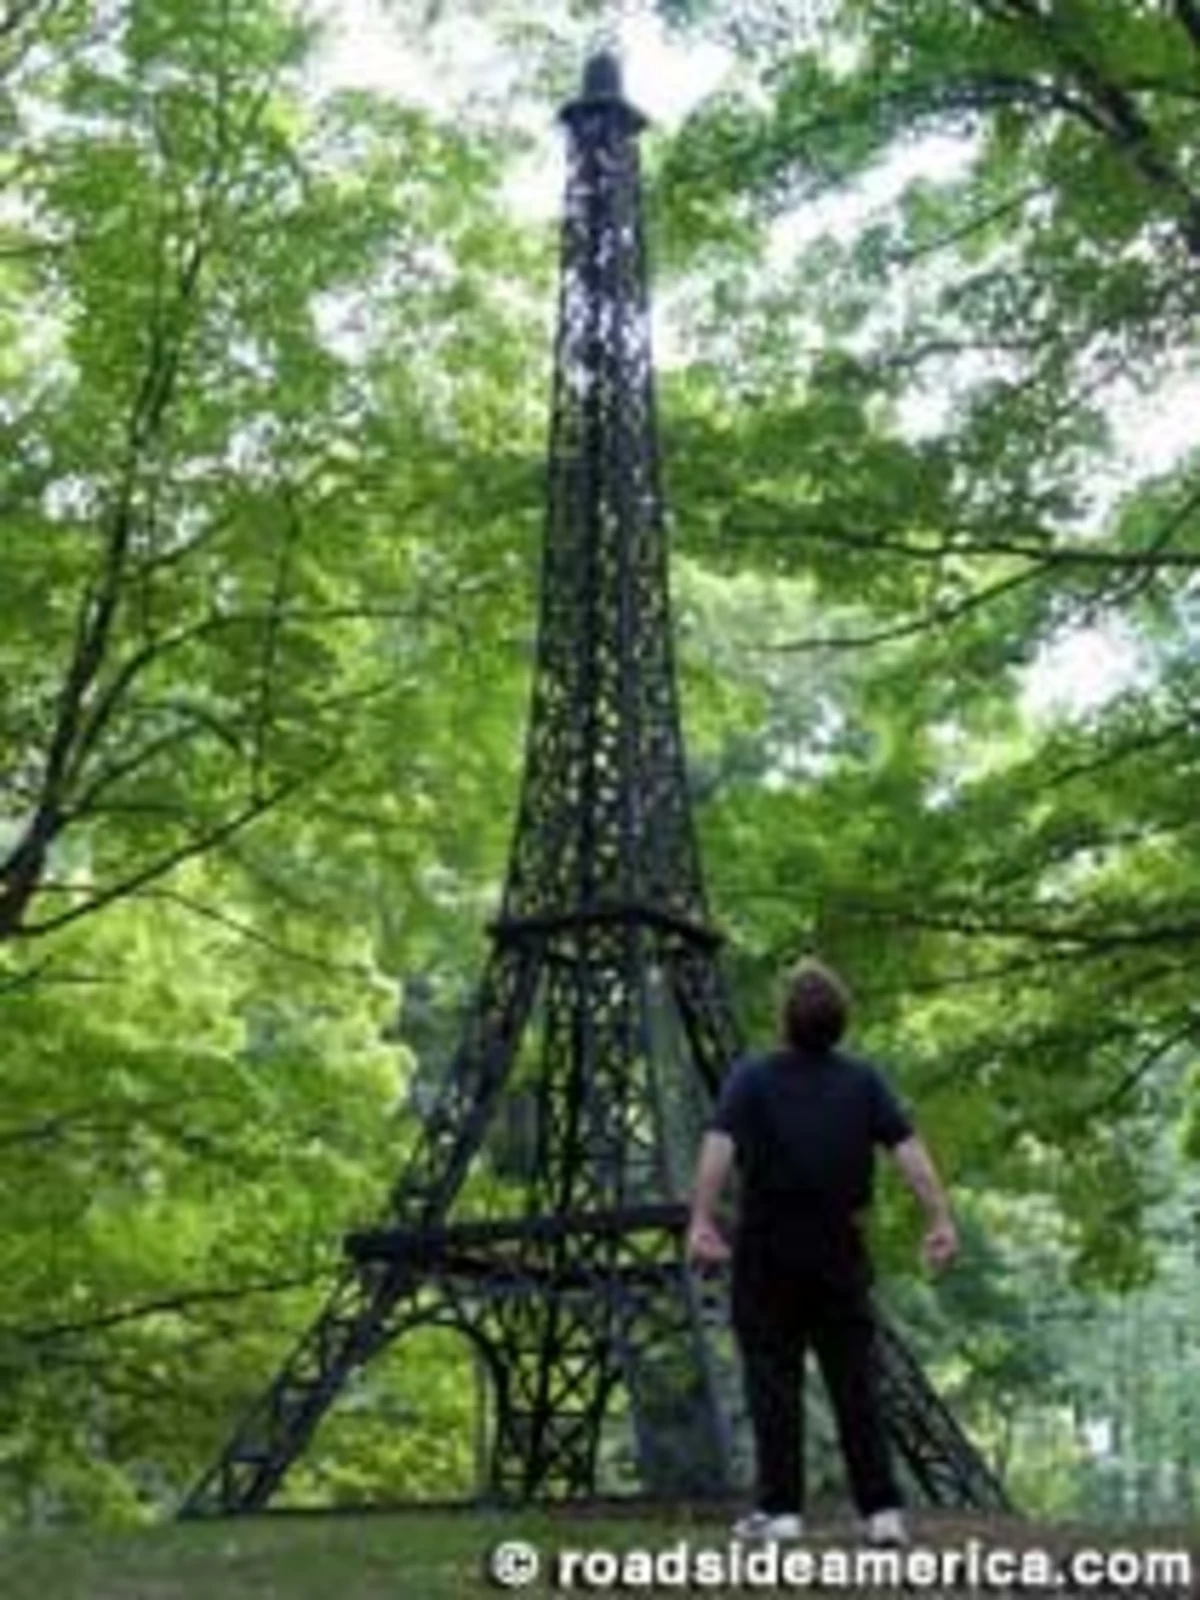 WEIRD THINGS IN MICHIGAN: Eiffel Tower in Michigan?